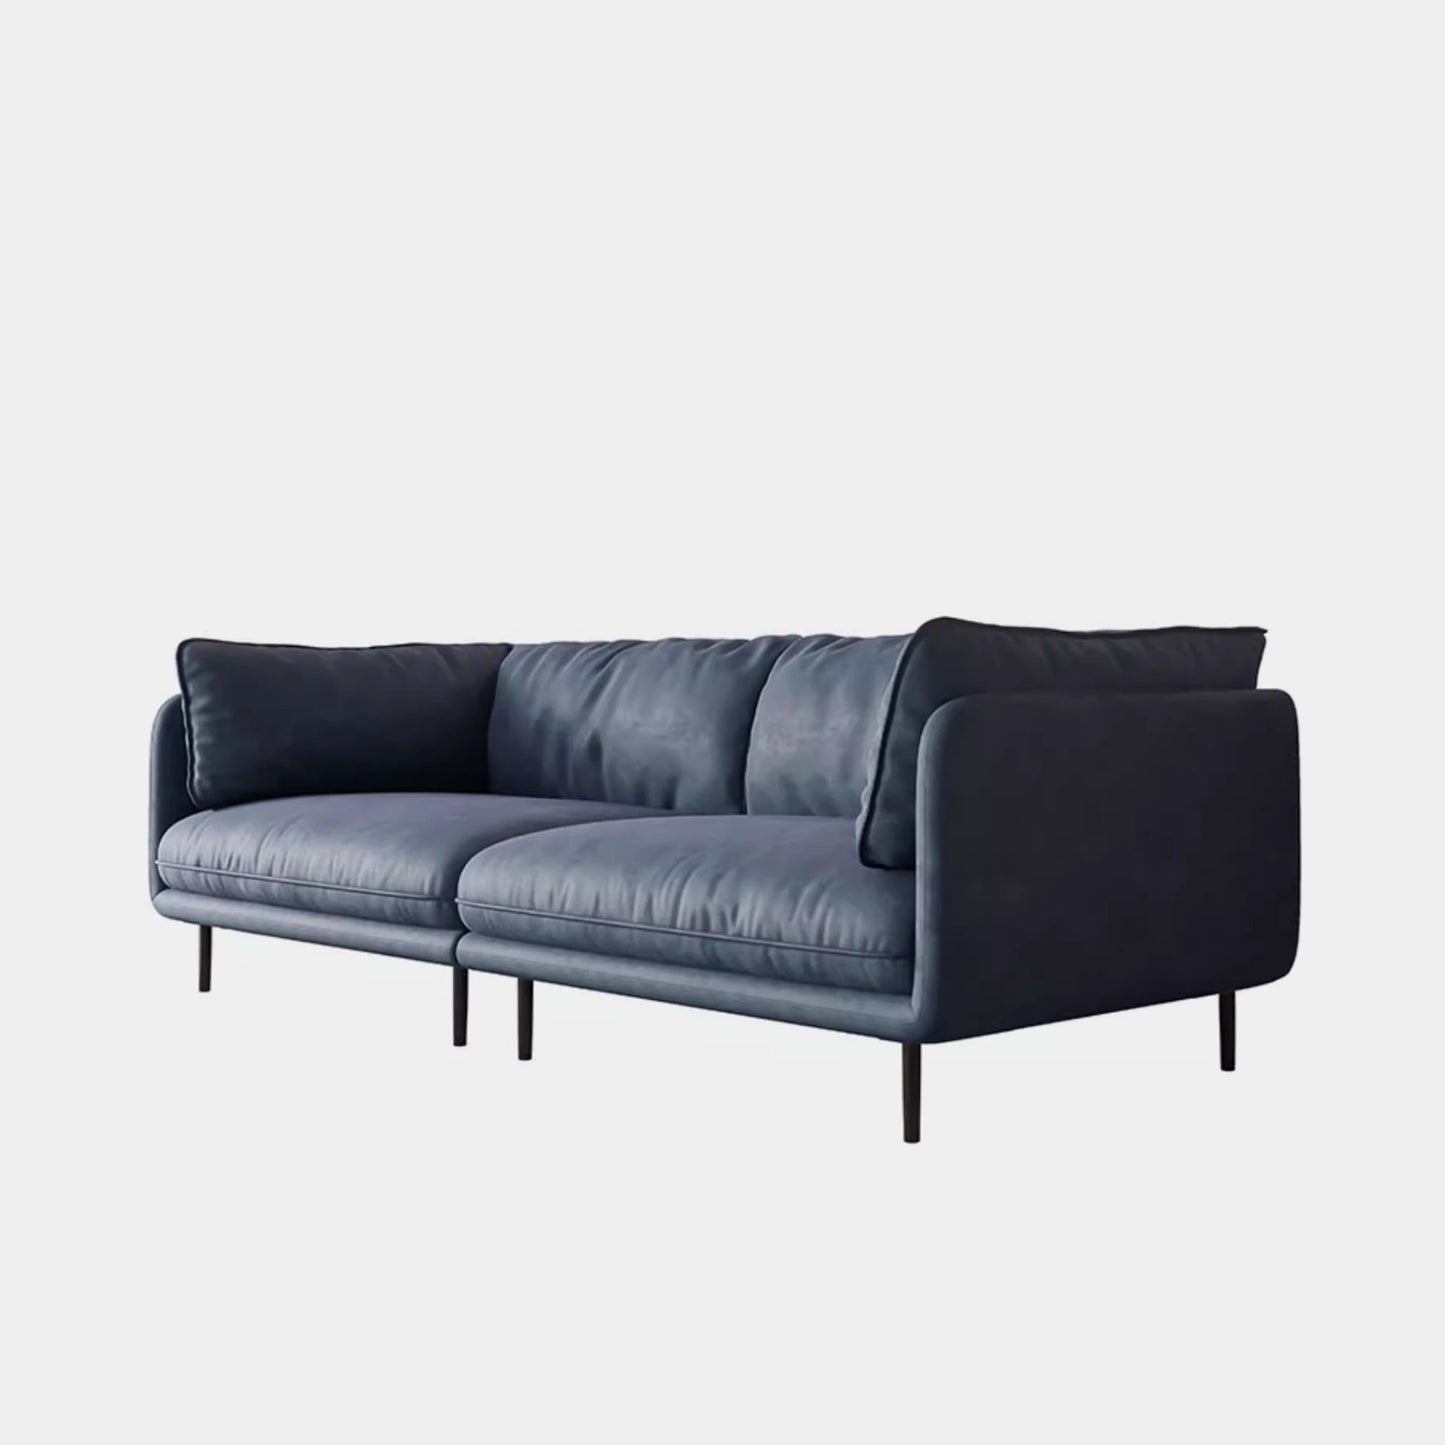 Cuddle blue fabric sofa